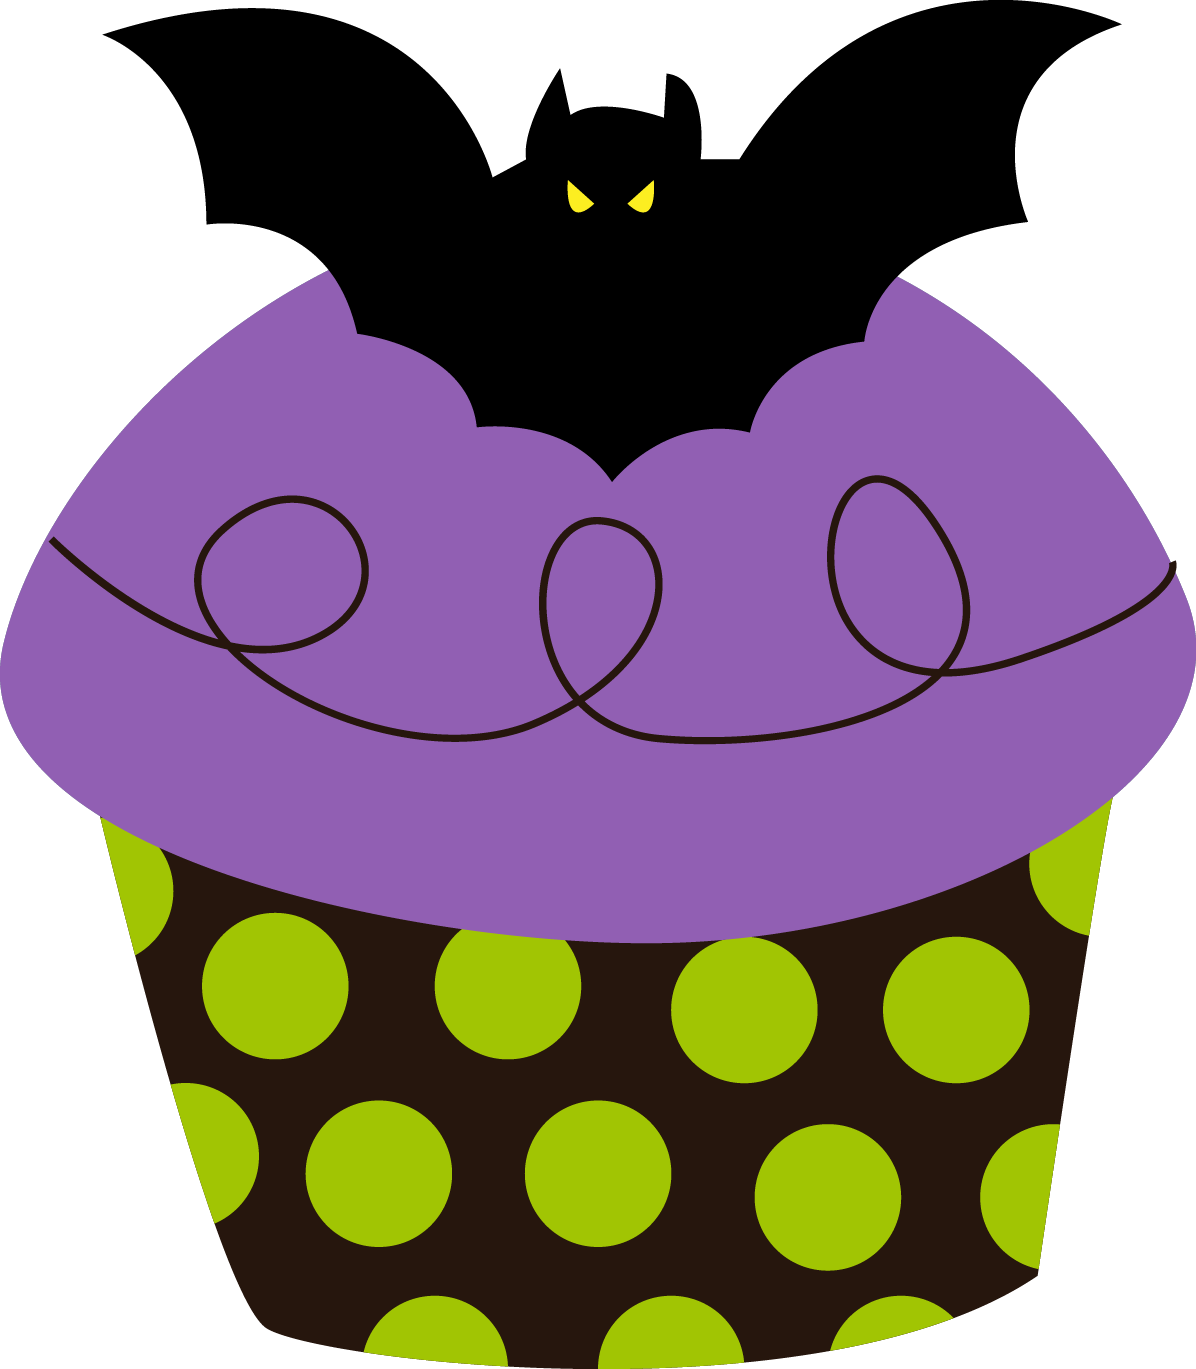 cupcake 14